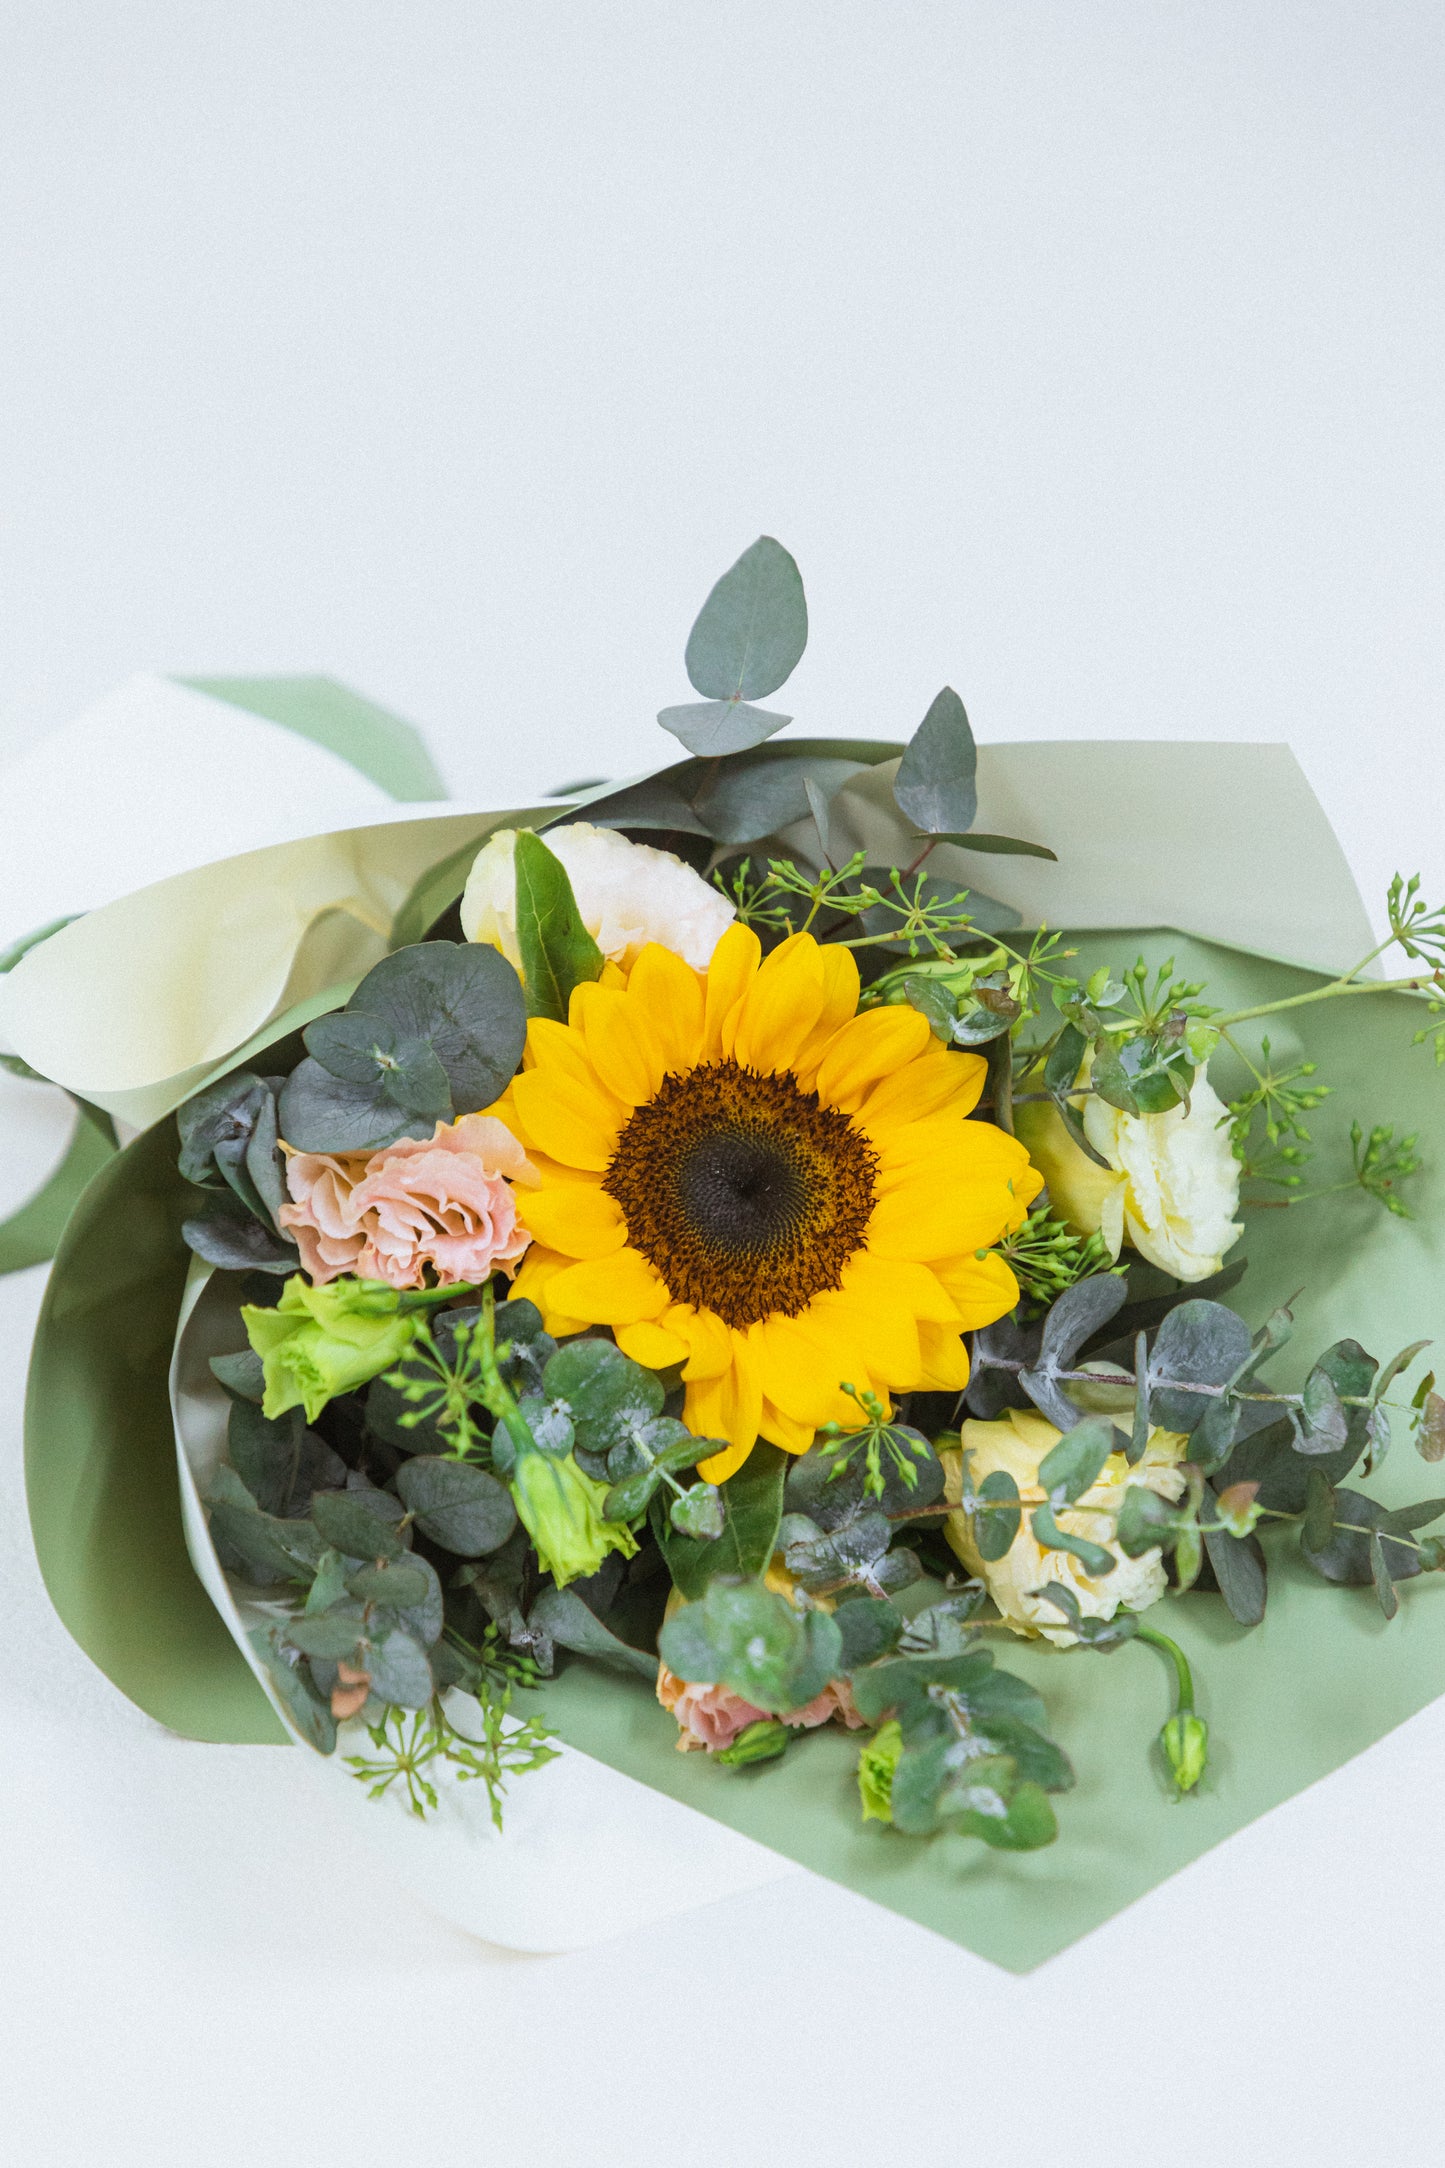 Bouquet of Fresh Flowers - Sunflower Surprise